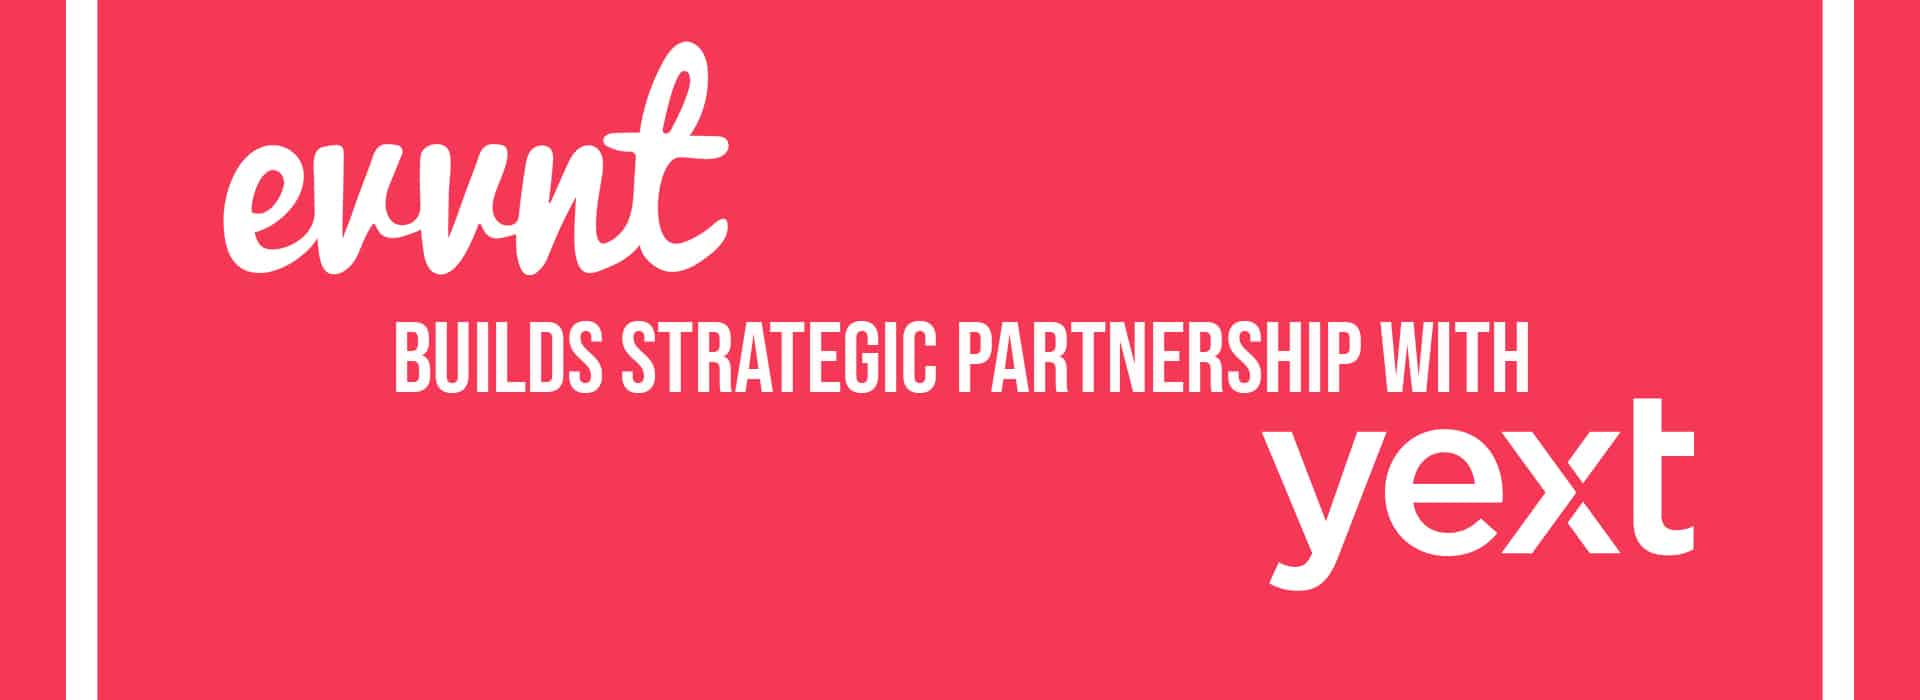 evvnt builds strategic partnership with yext